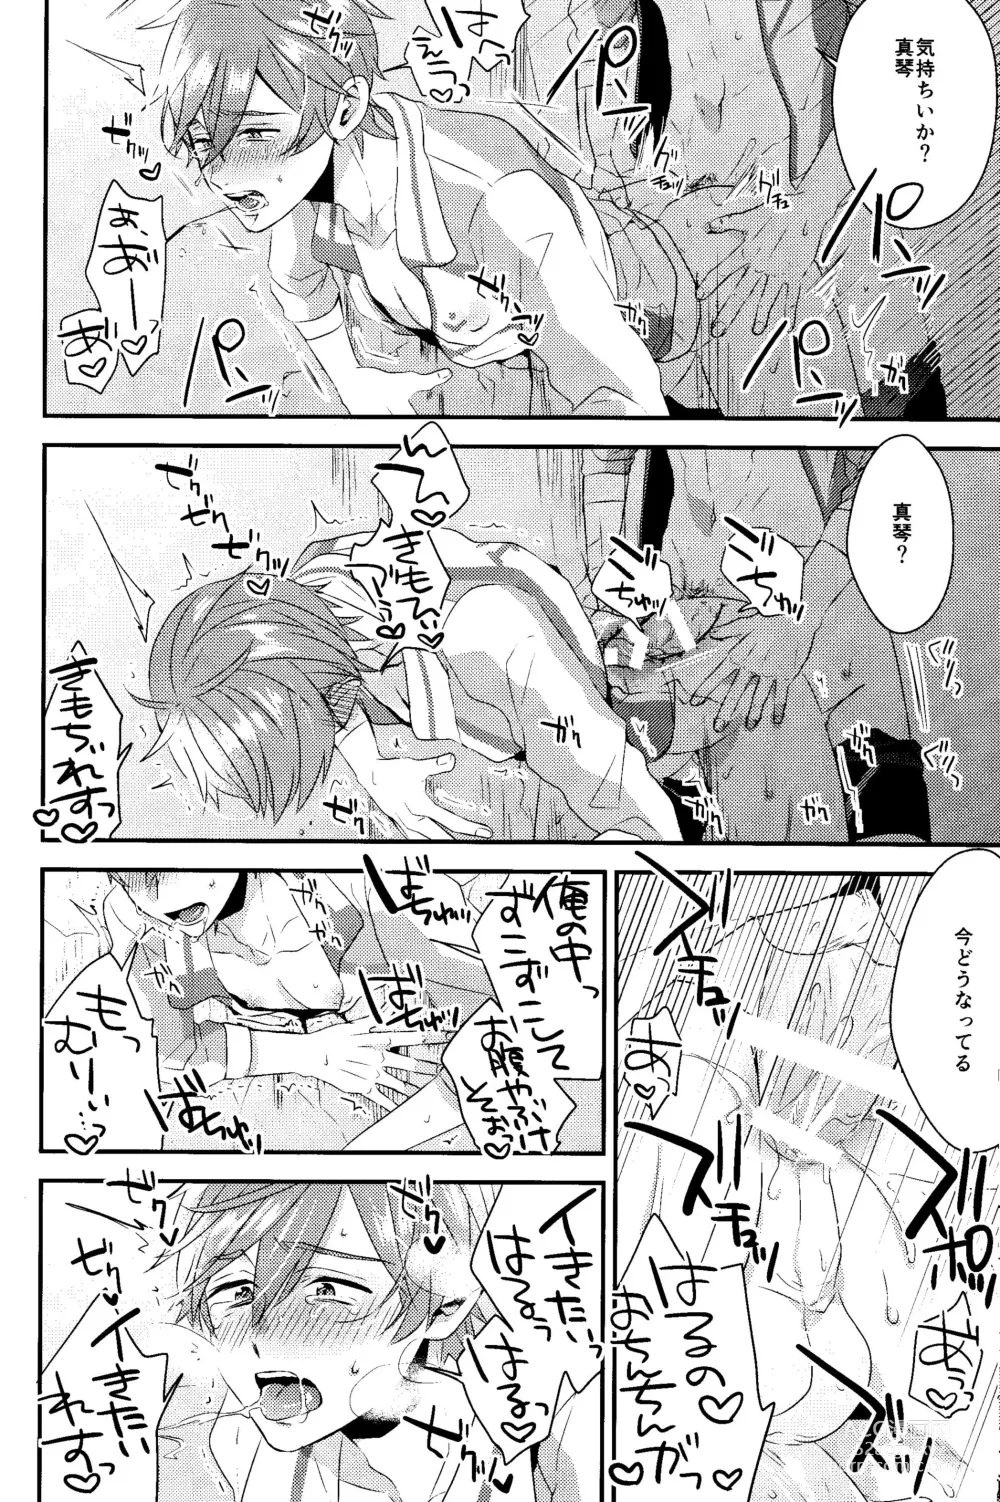 Page 9 of doujinshi Kabe shiri hon